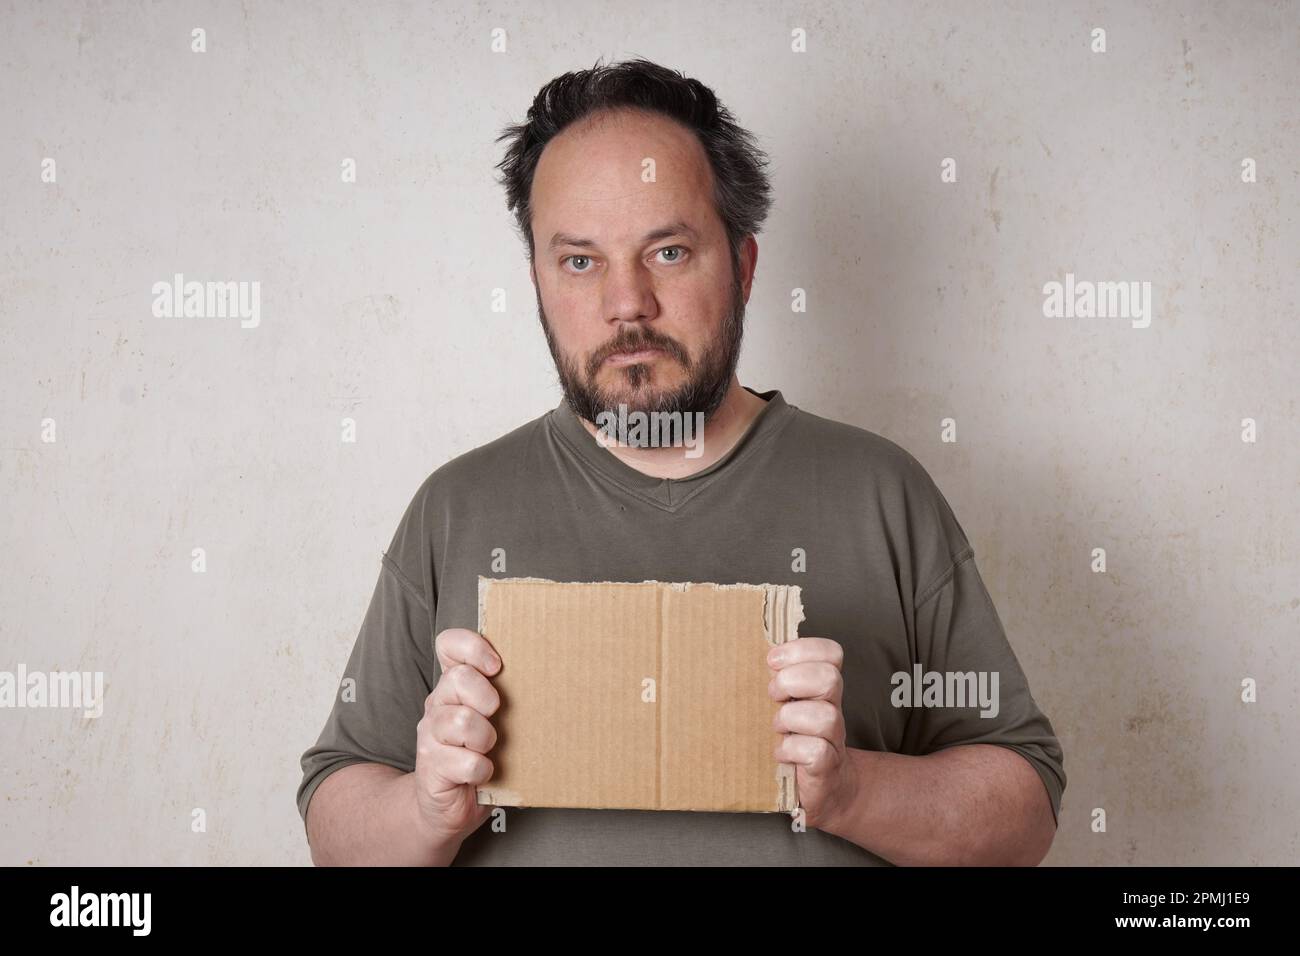 grubby scruffy man holding blank cardboard sign Stock Photo